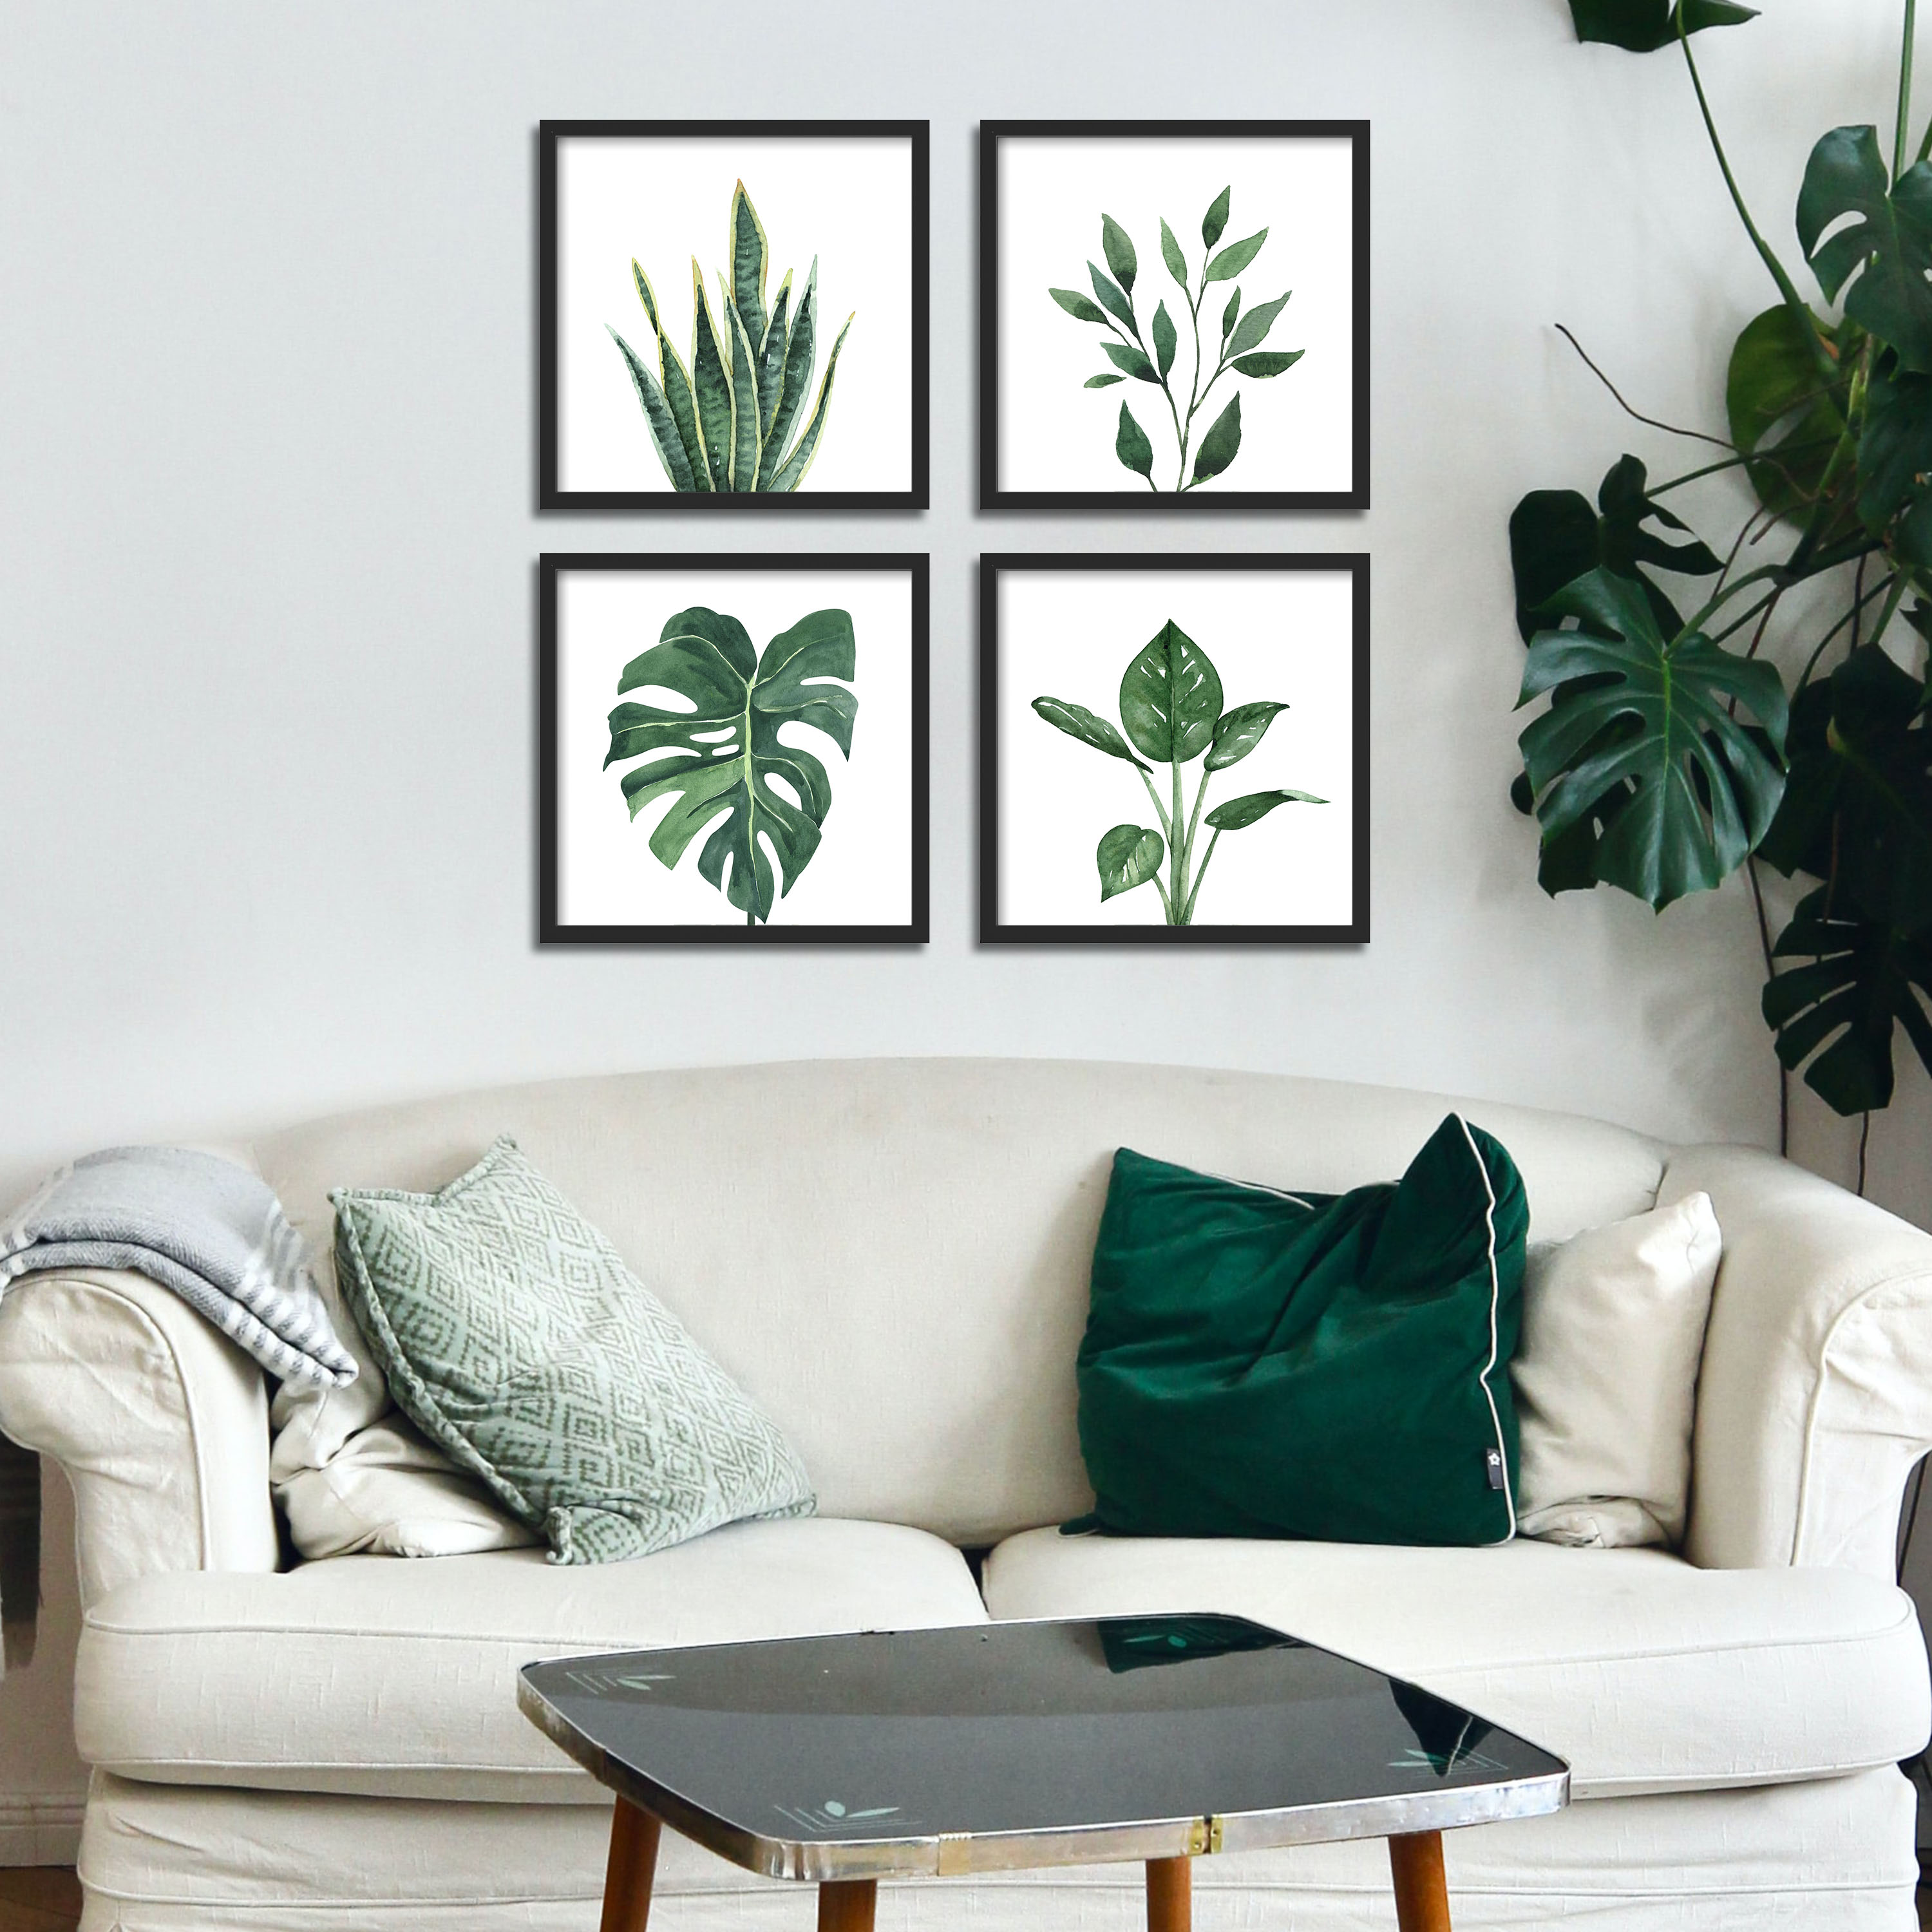 ArtbyHannah 10x10 inch Botanical Framed Wall Art Set with Watercolor Tropical Plants Art Prints, Set of 4 Black Wall Decor for Bathroom, Living Room - image 3 of 10